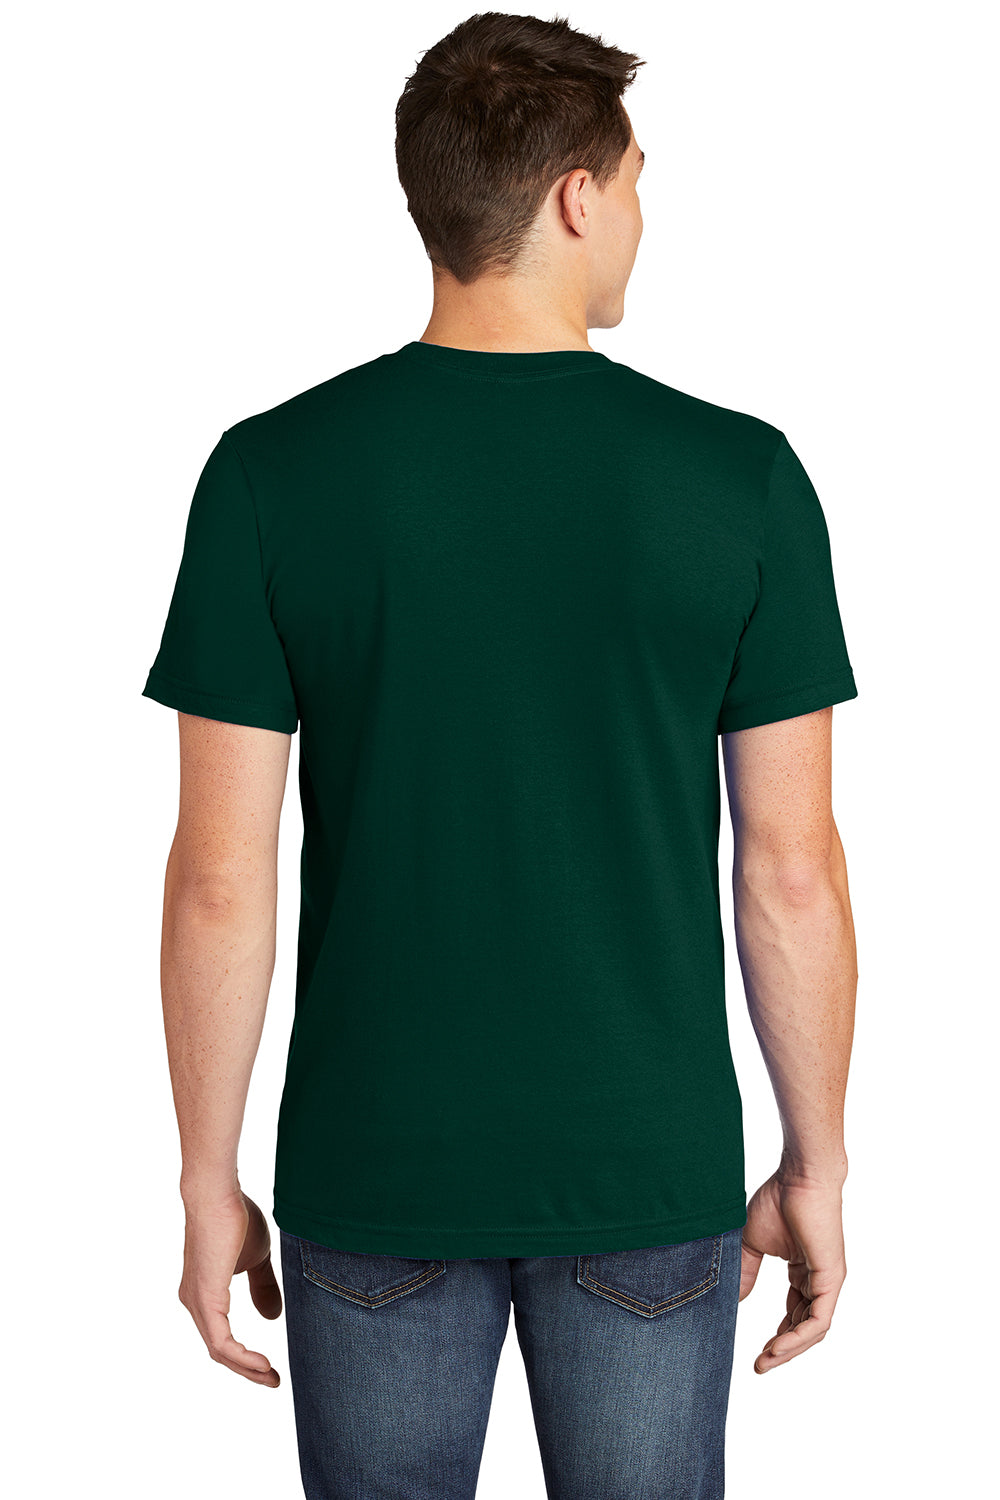 American Apparel 2001 Mens Fine Jersey Short Sleeve Crewneck T-Shirt Forest Green Model Back